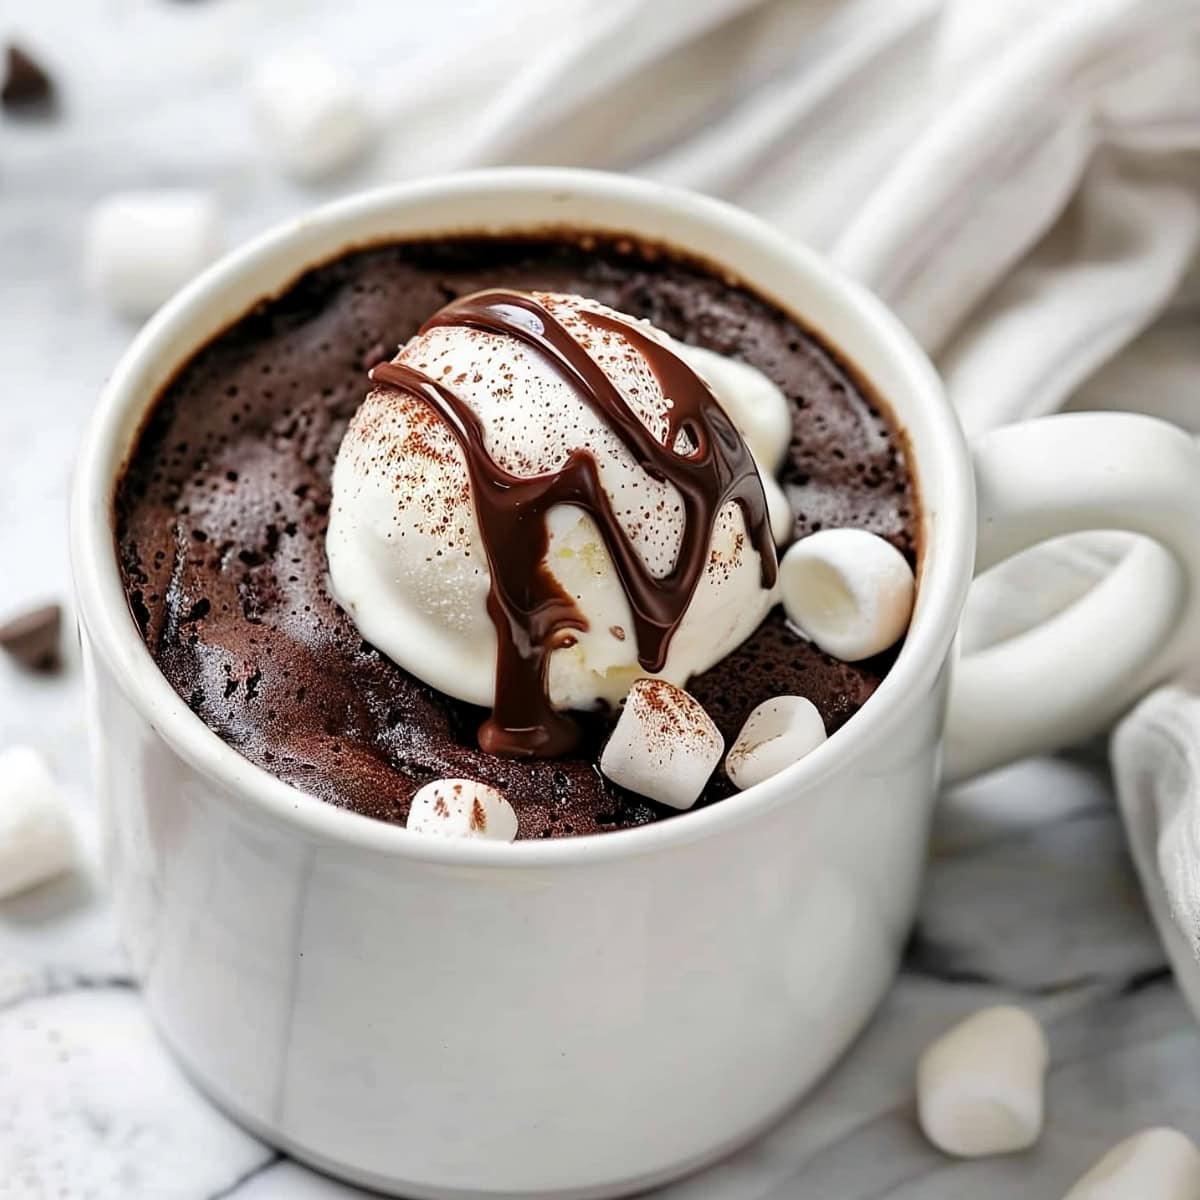 Hot chocolate mug cake with a scoop of vanilla ice cream, marshmallows and chocolate sauce.